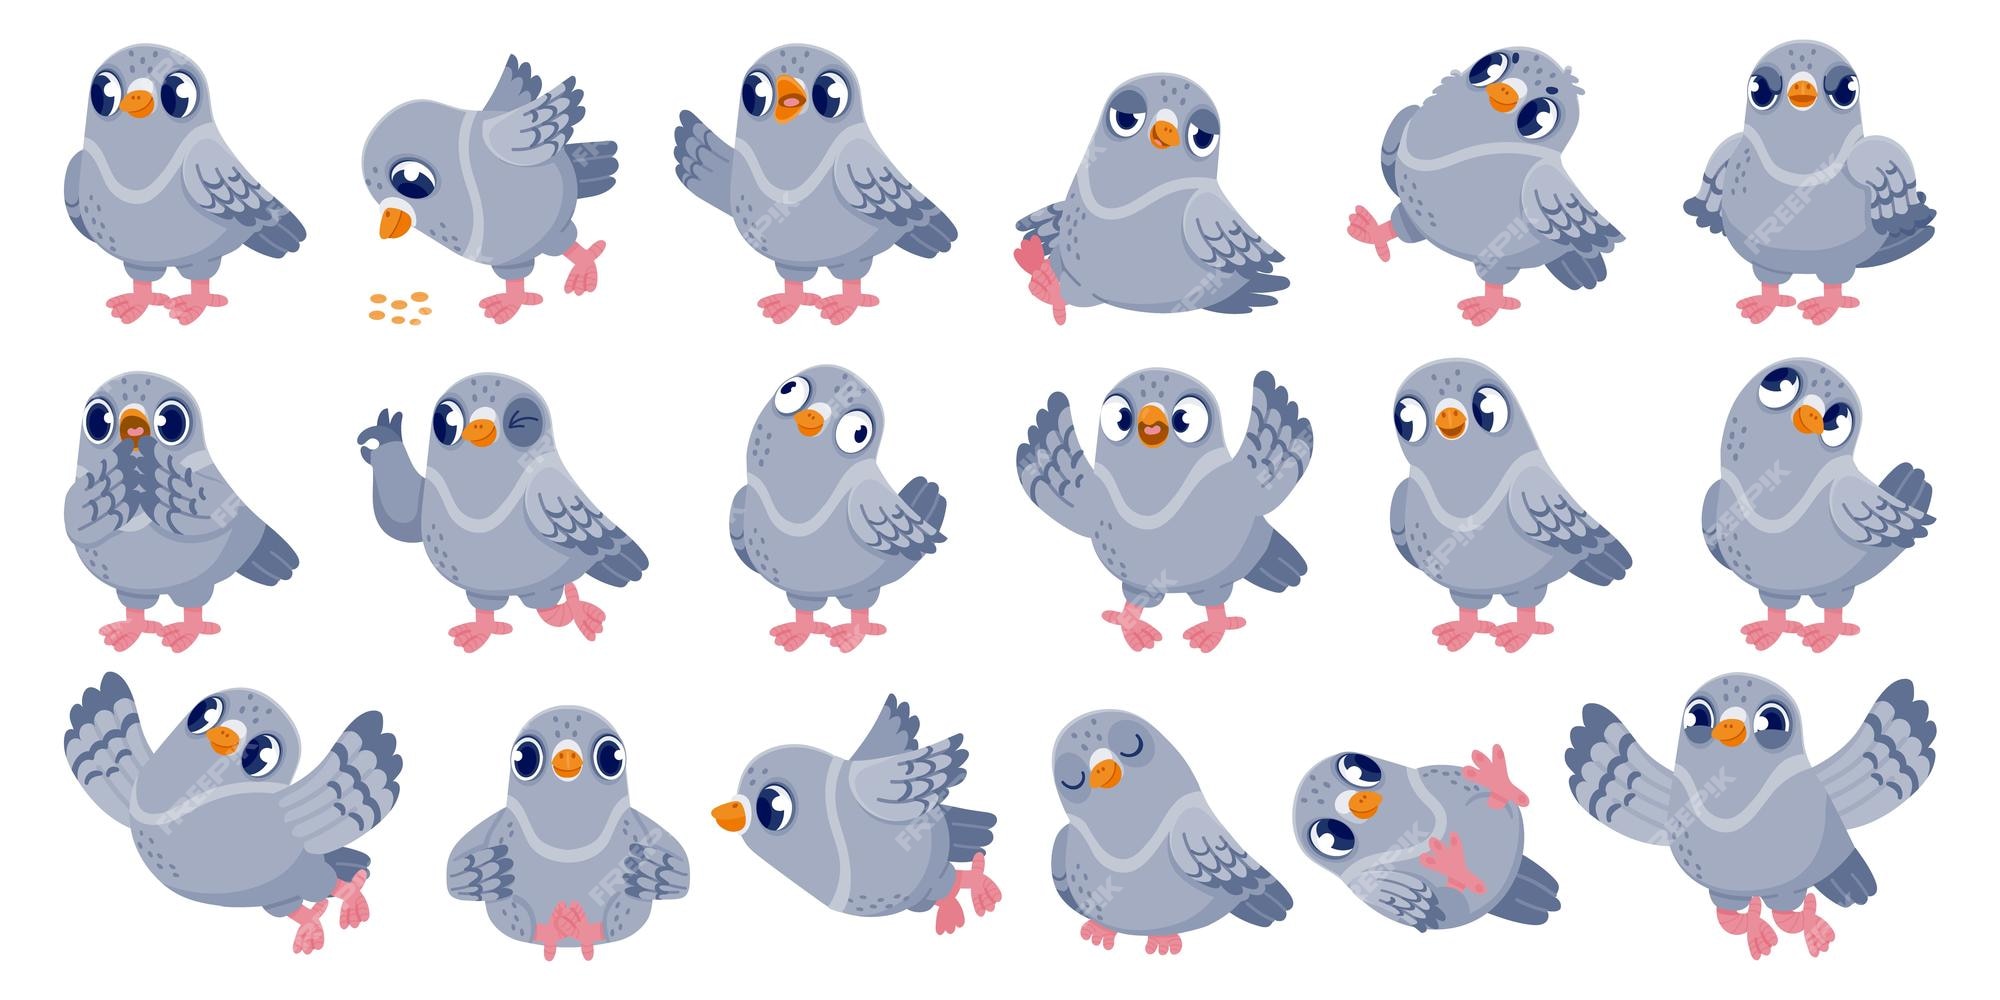 Bird animation Vectors & Illustrations for Free Download | Freepik